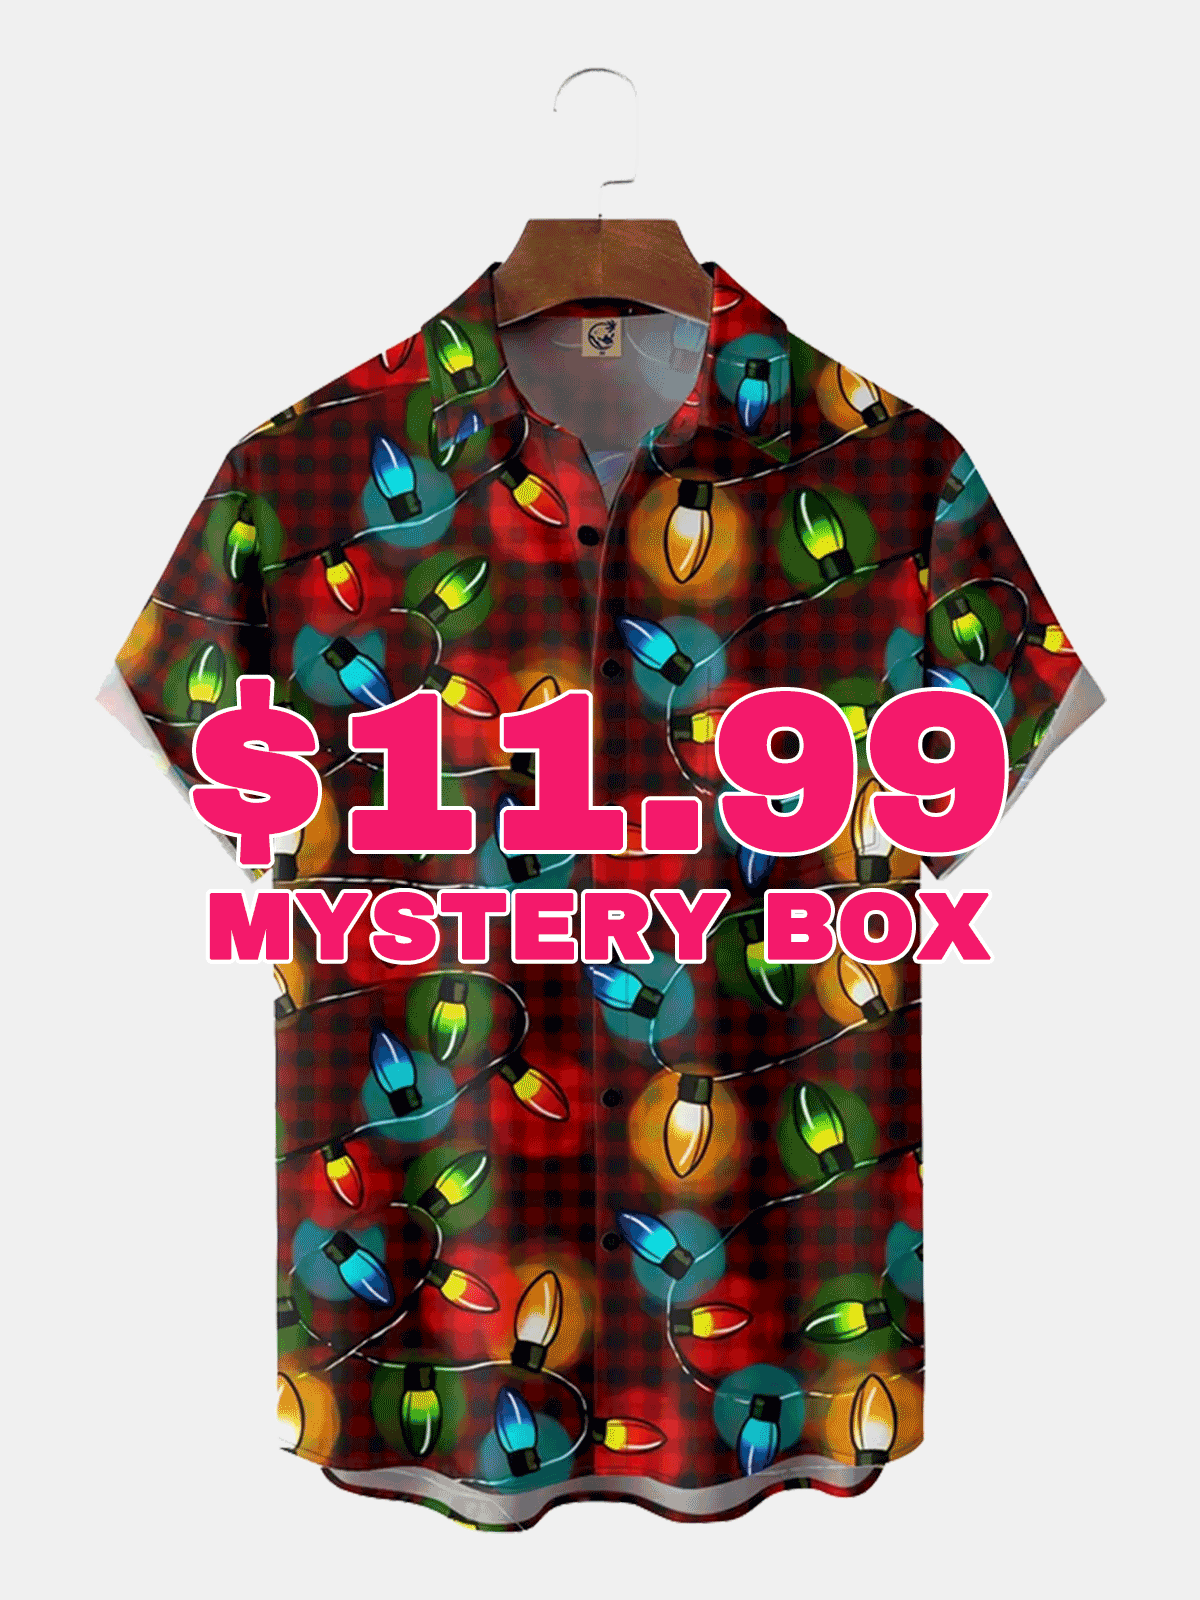              MYSTERY BOX $11....